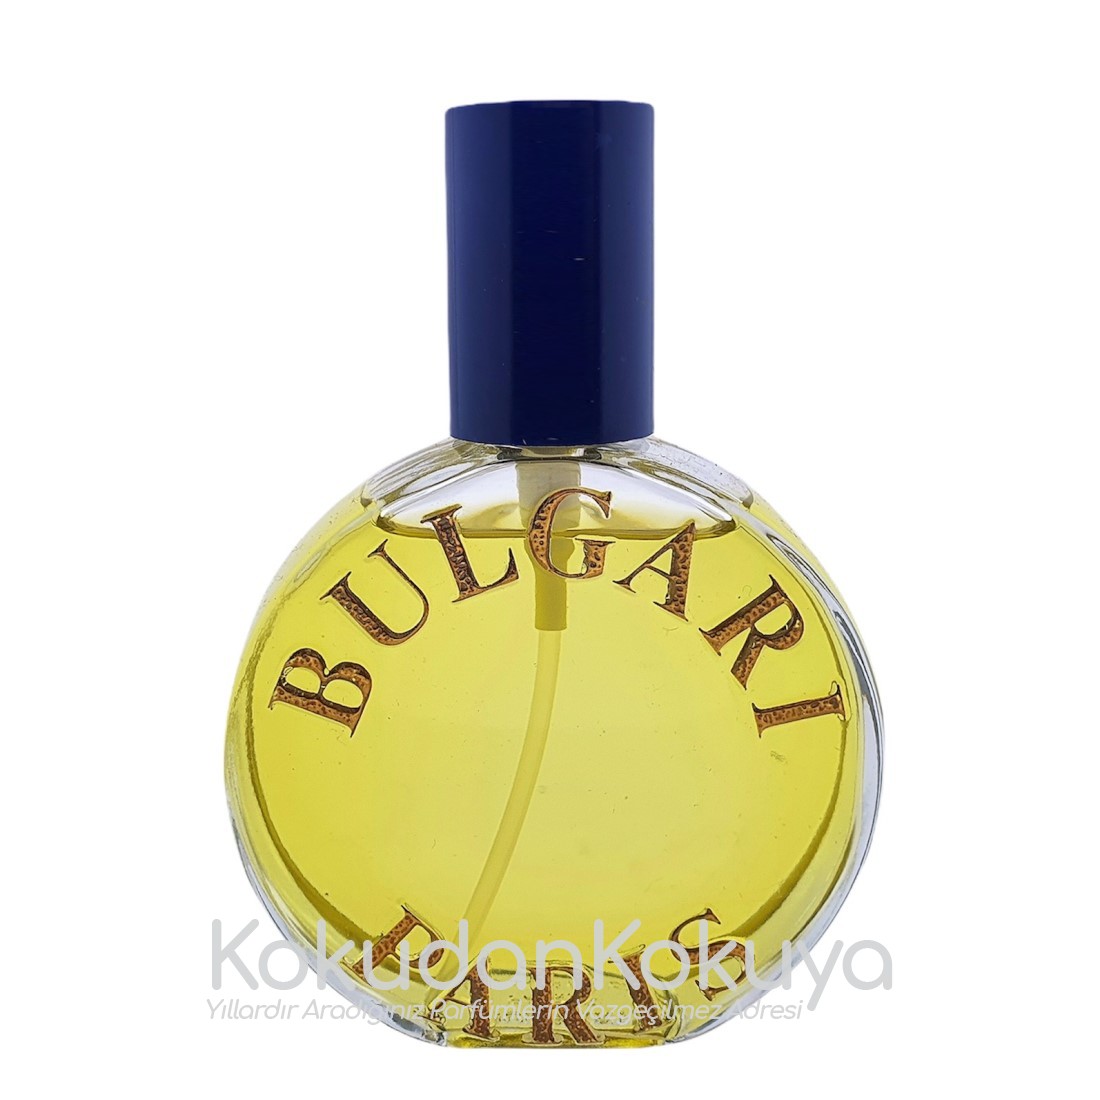 BVLGARI Paris (Vintage) Parfüm Kadın 60ml Eau De Toilette (EDT) Sprey 